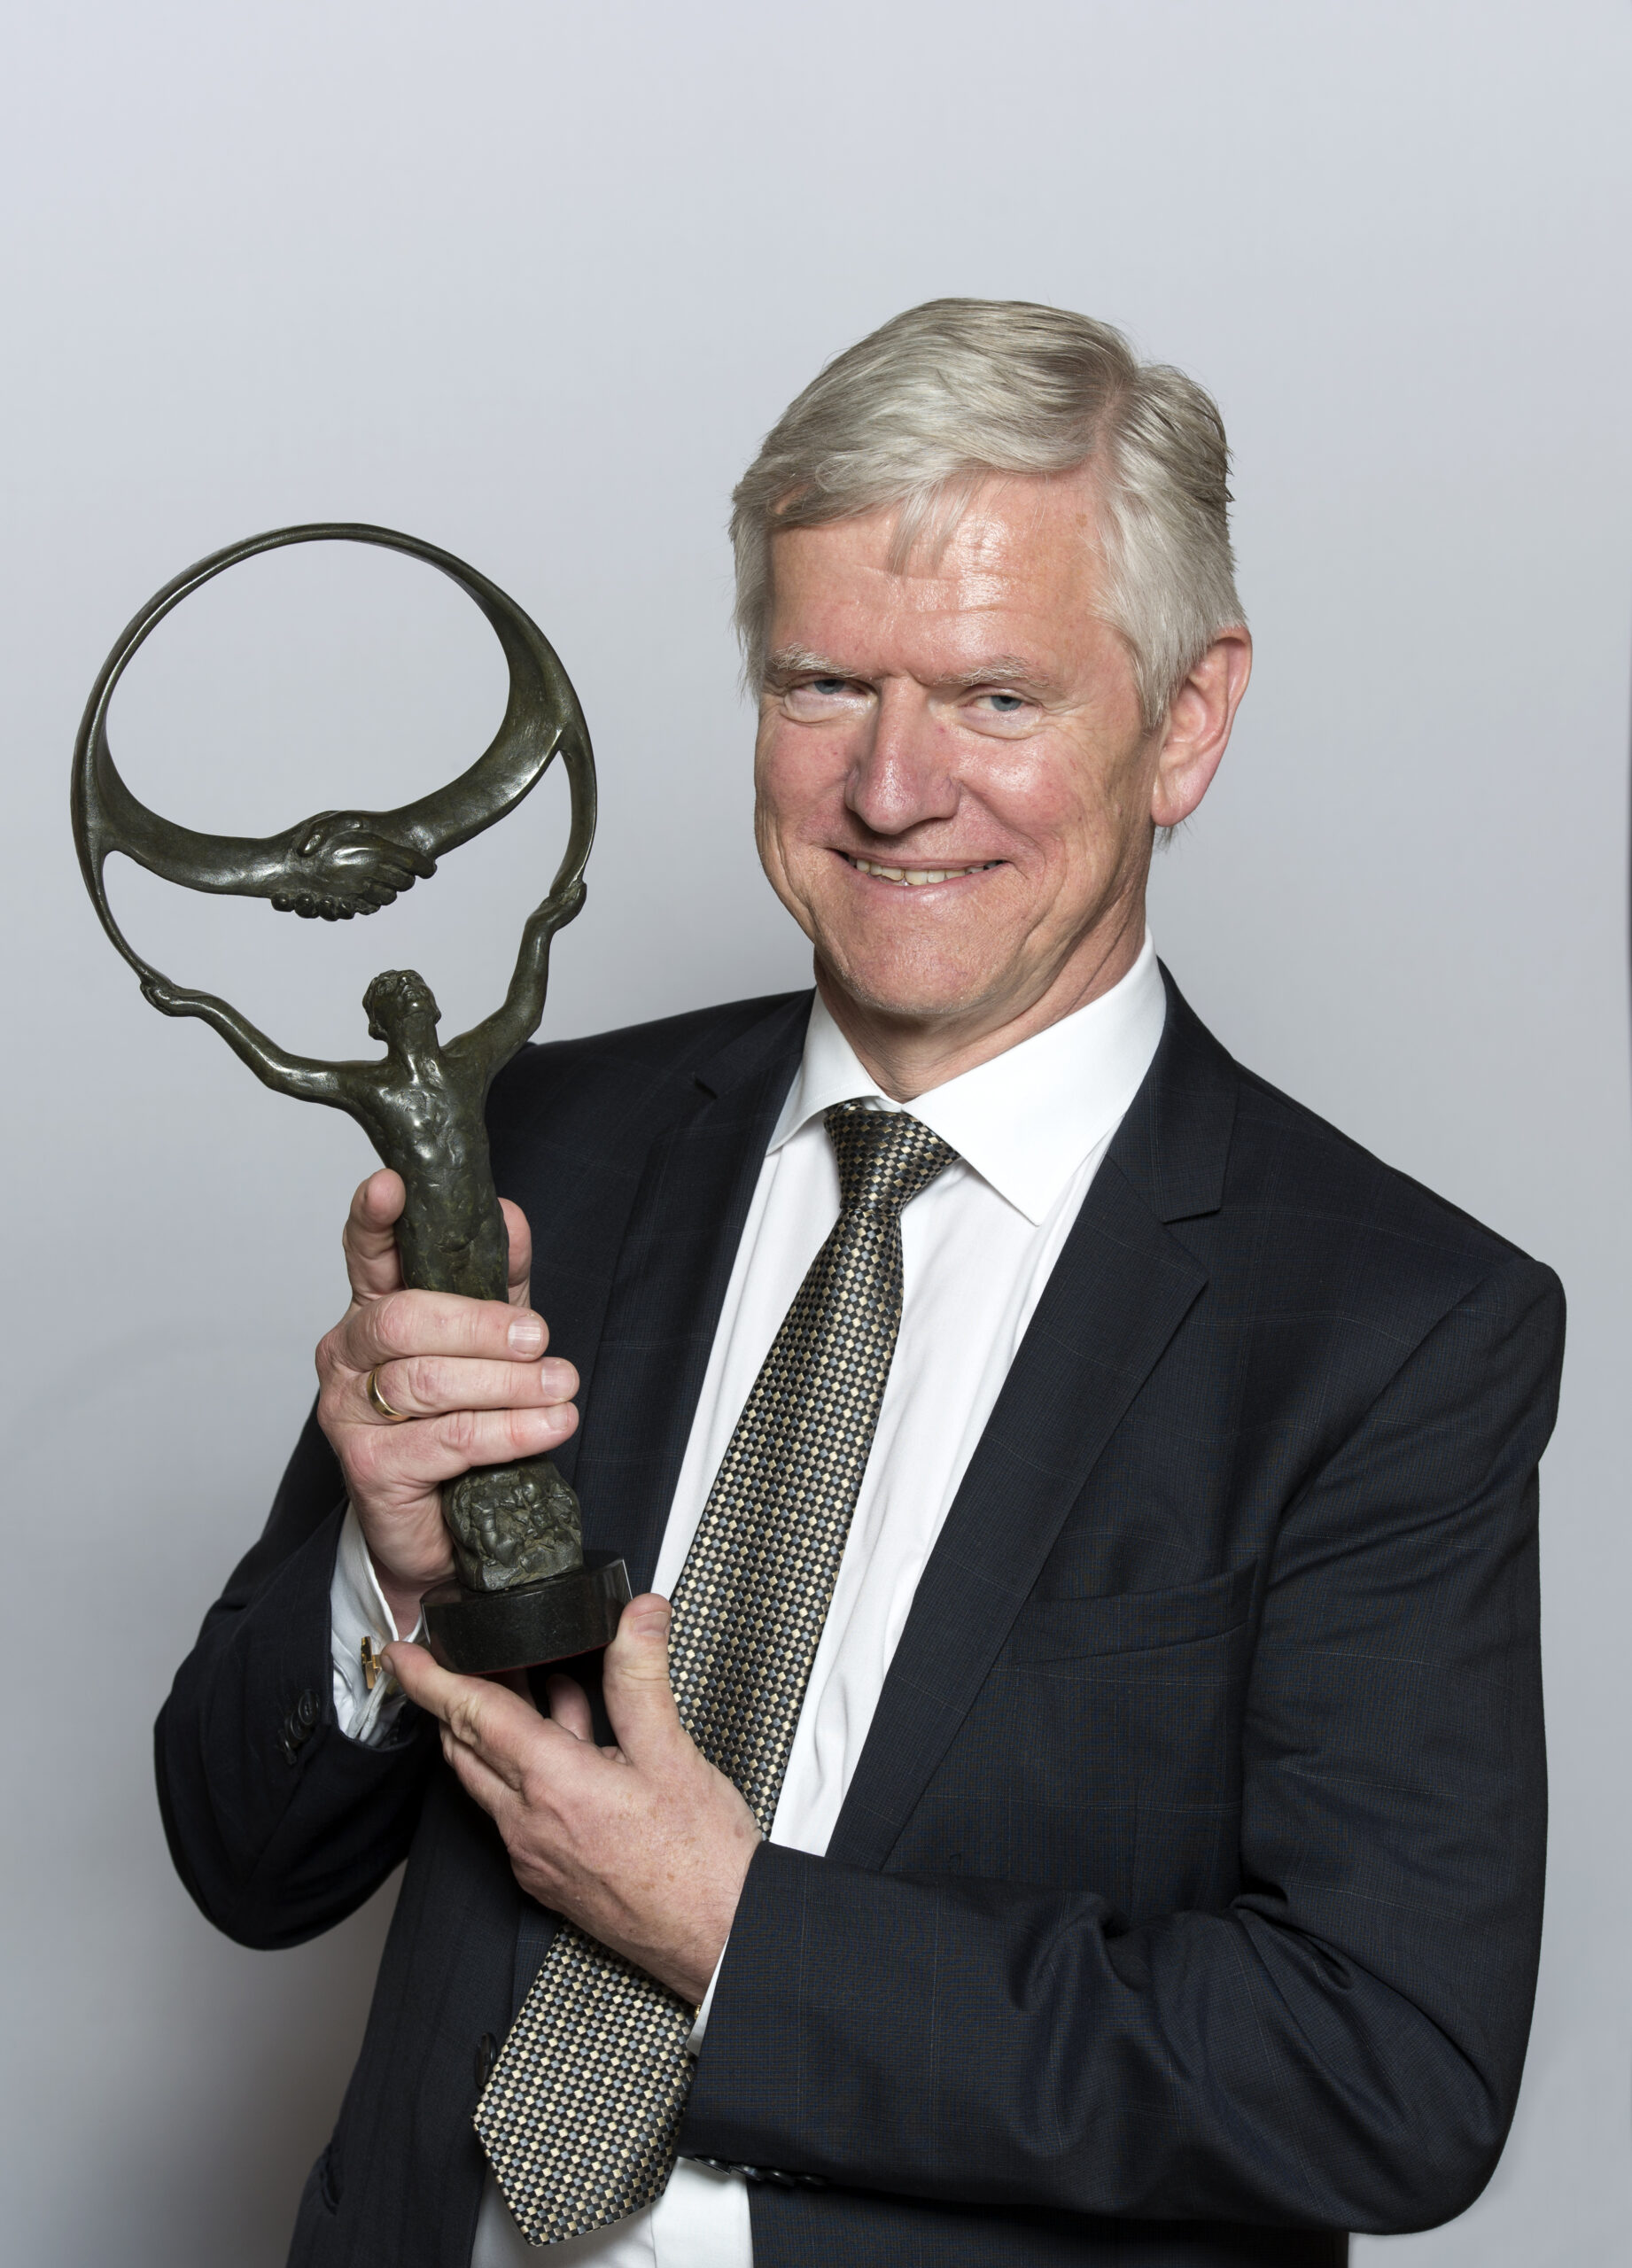 Tore Lærdal - 2016 Oslo Business for Peace Award Honouree